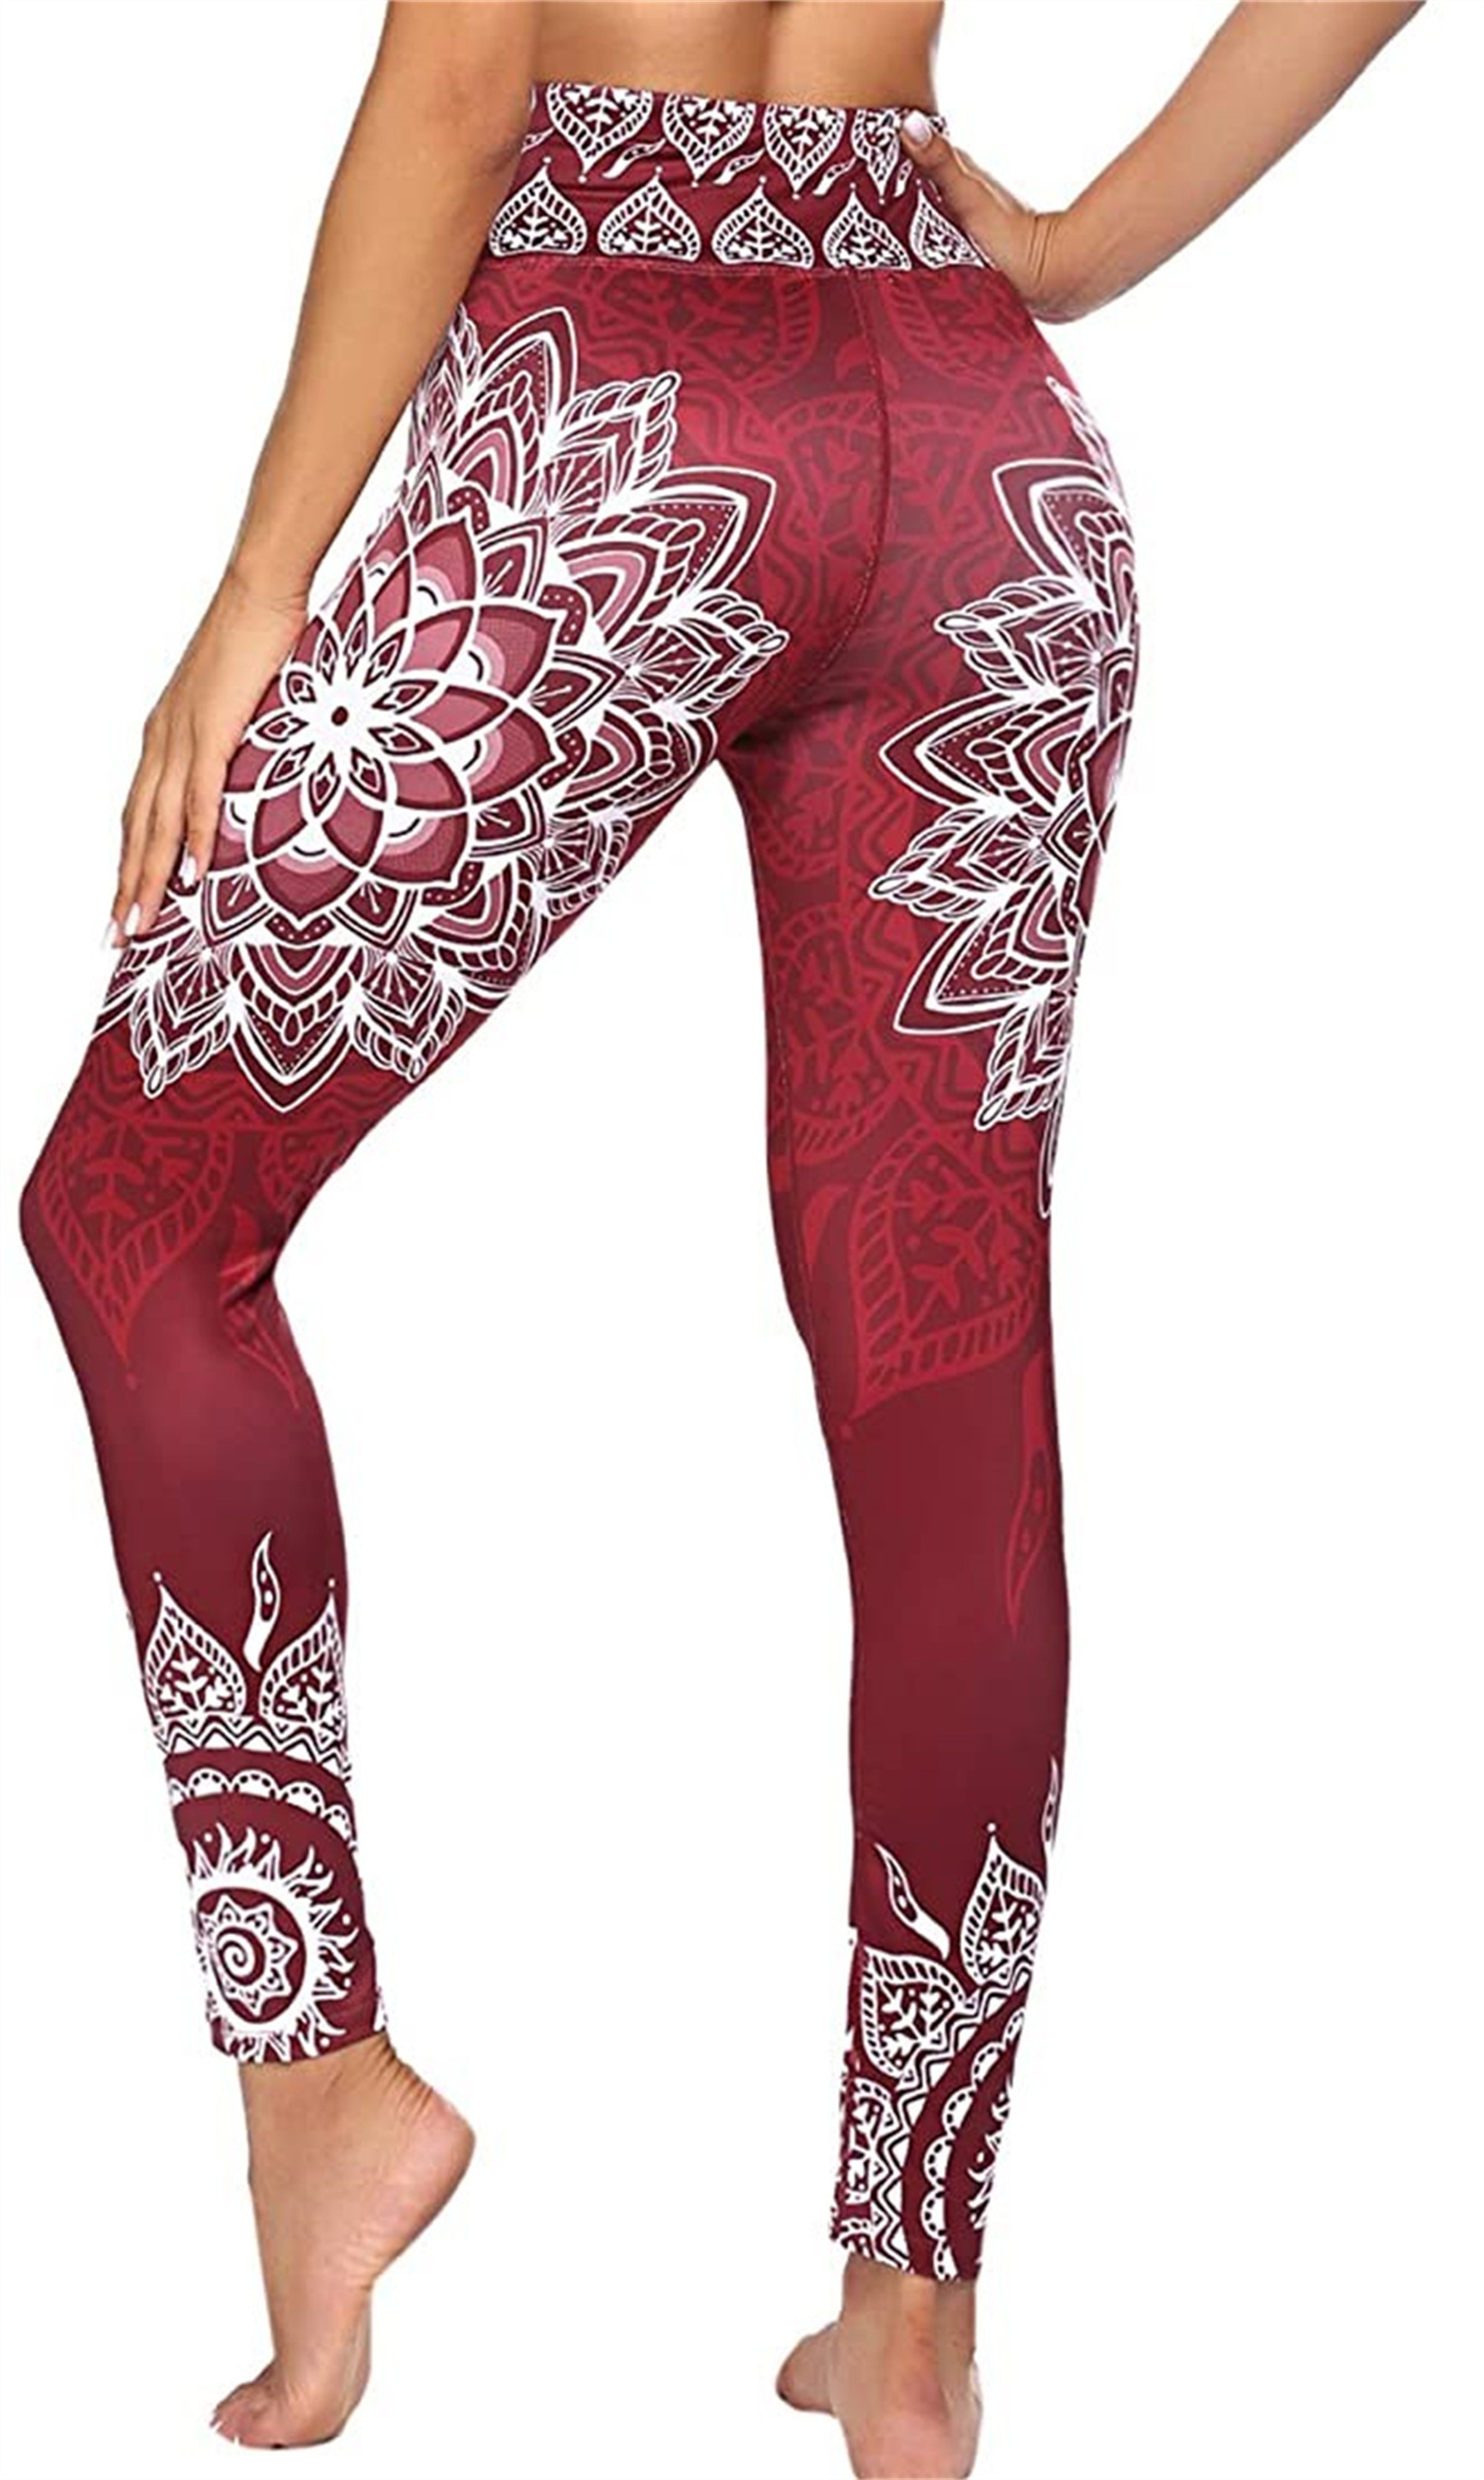 Mandala Leggings, Yoga Pants, Colorful Patterned High Waist